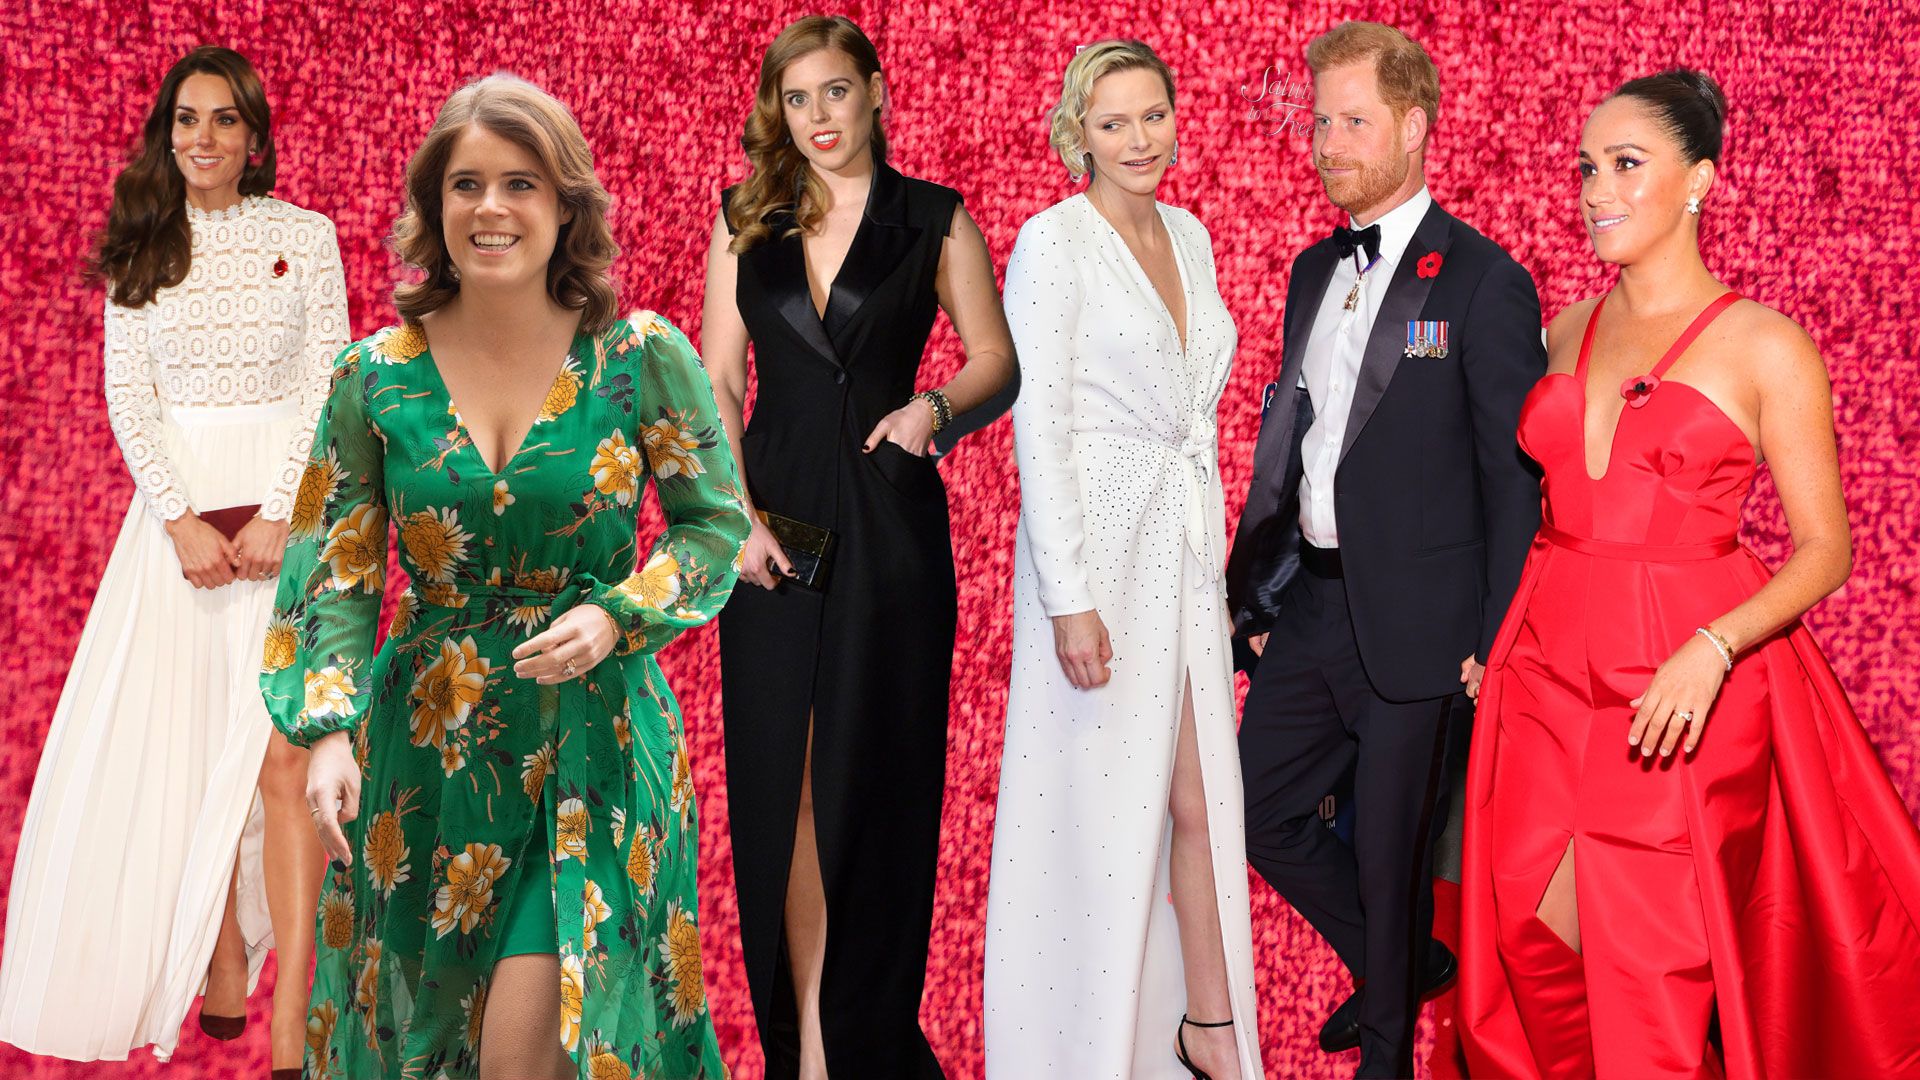 kate middleton, princess eugenie, princess beatrice, princess charlene, prince harry and meghan markle on red backdrop